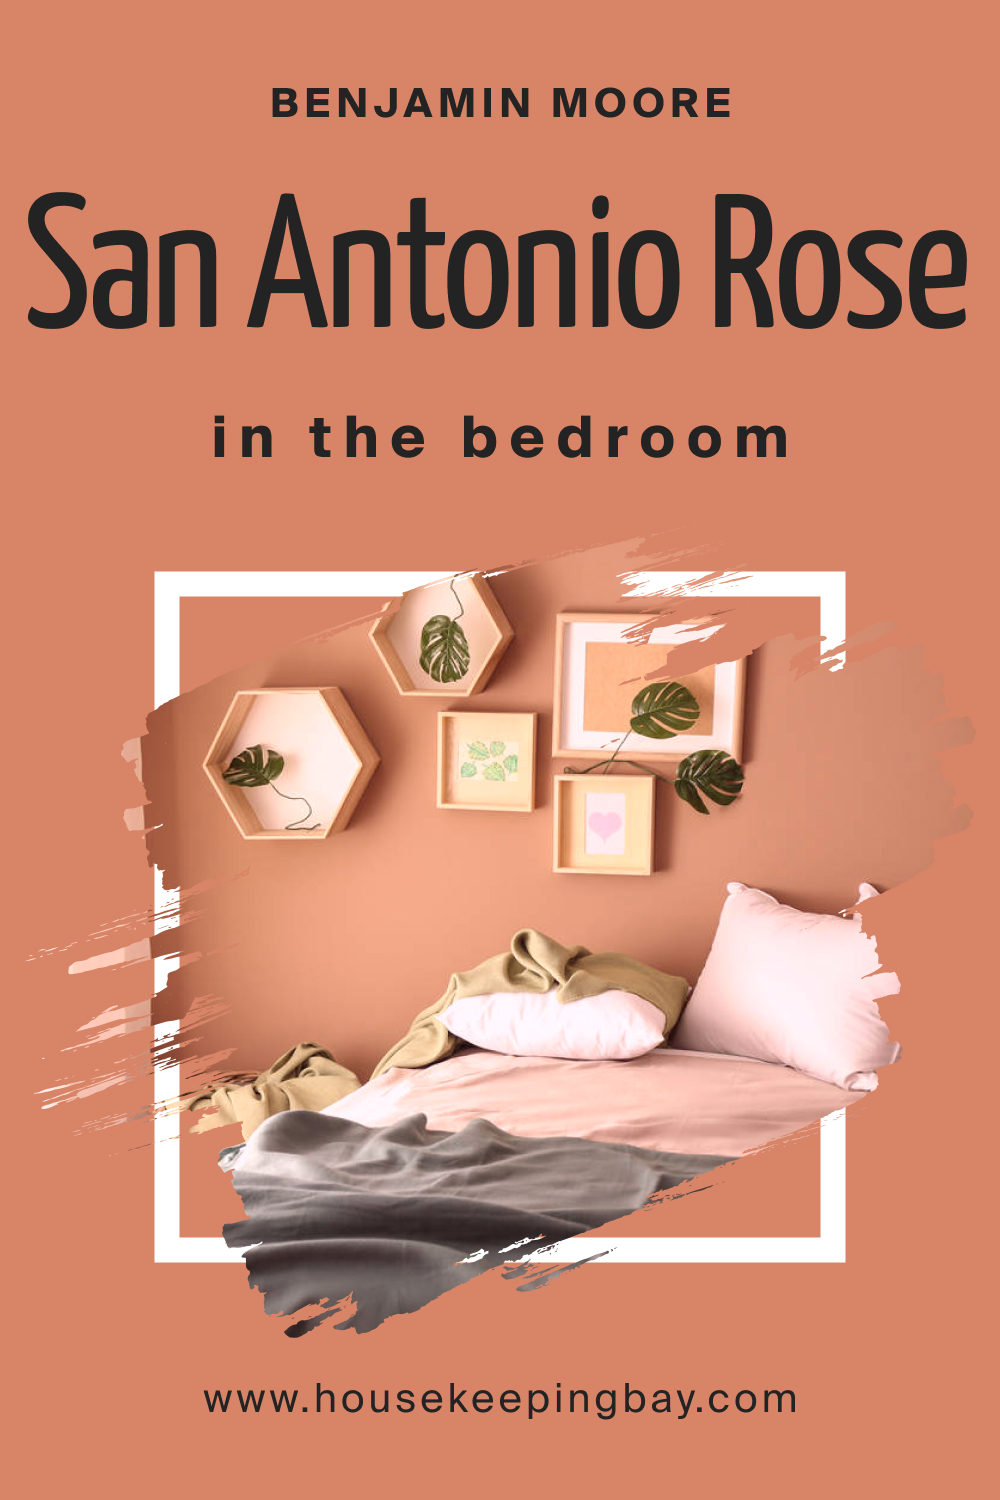 Benjamin Moore. San Antonio Rose 027 for the Bedroom